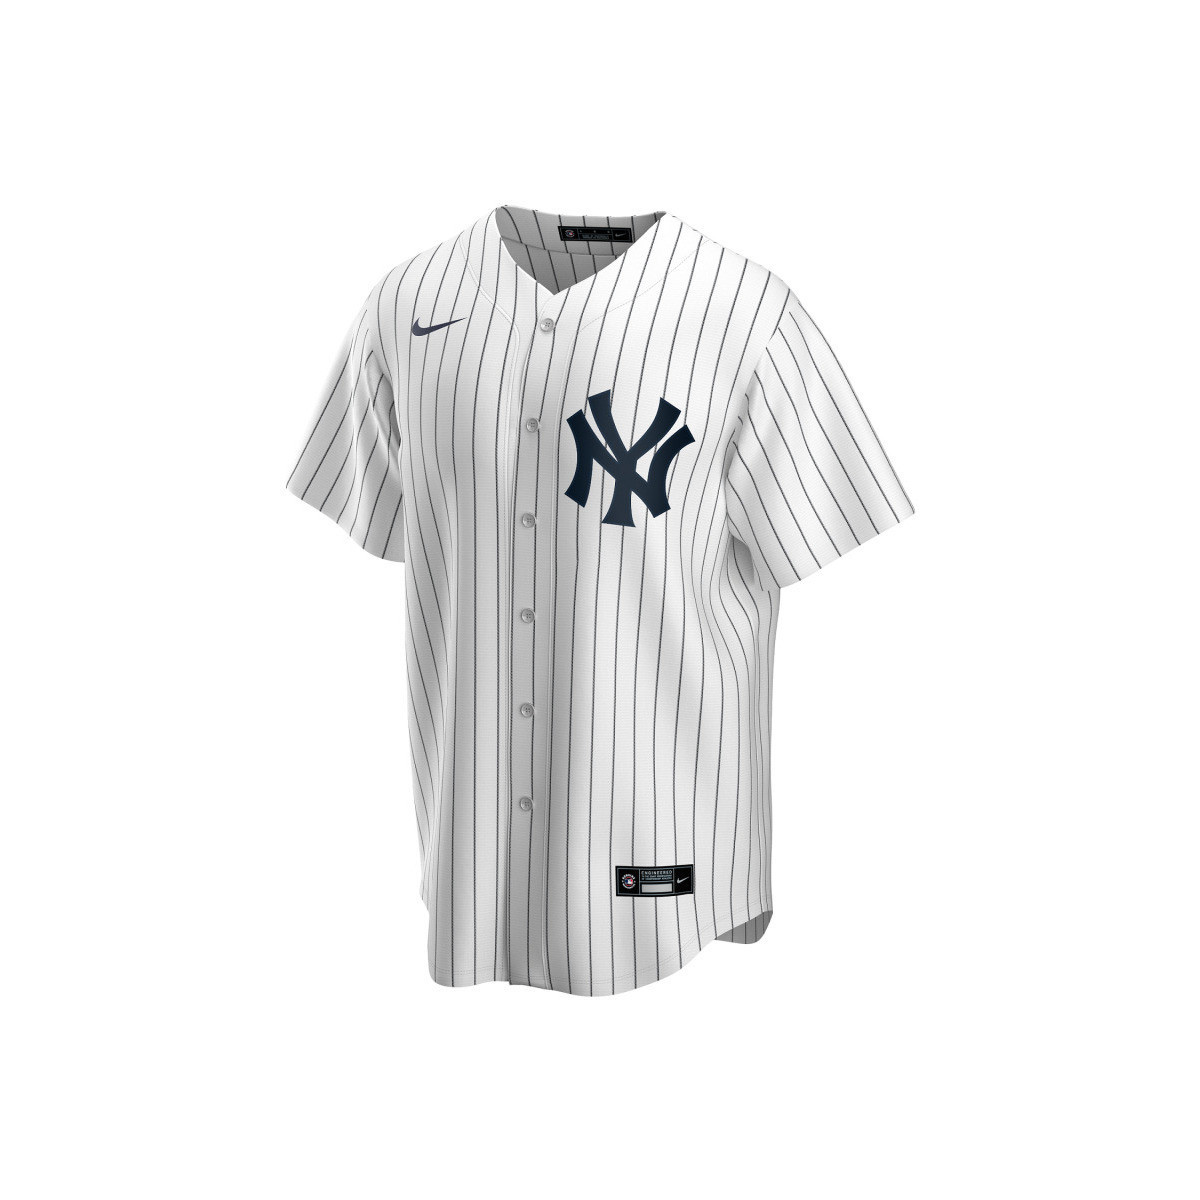 Vêtements T-shirts manches courtes Nike Maillot de Baseball MLB New Yo Multicolore